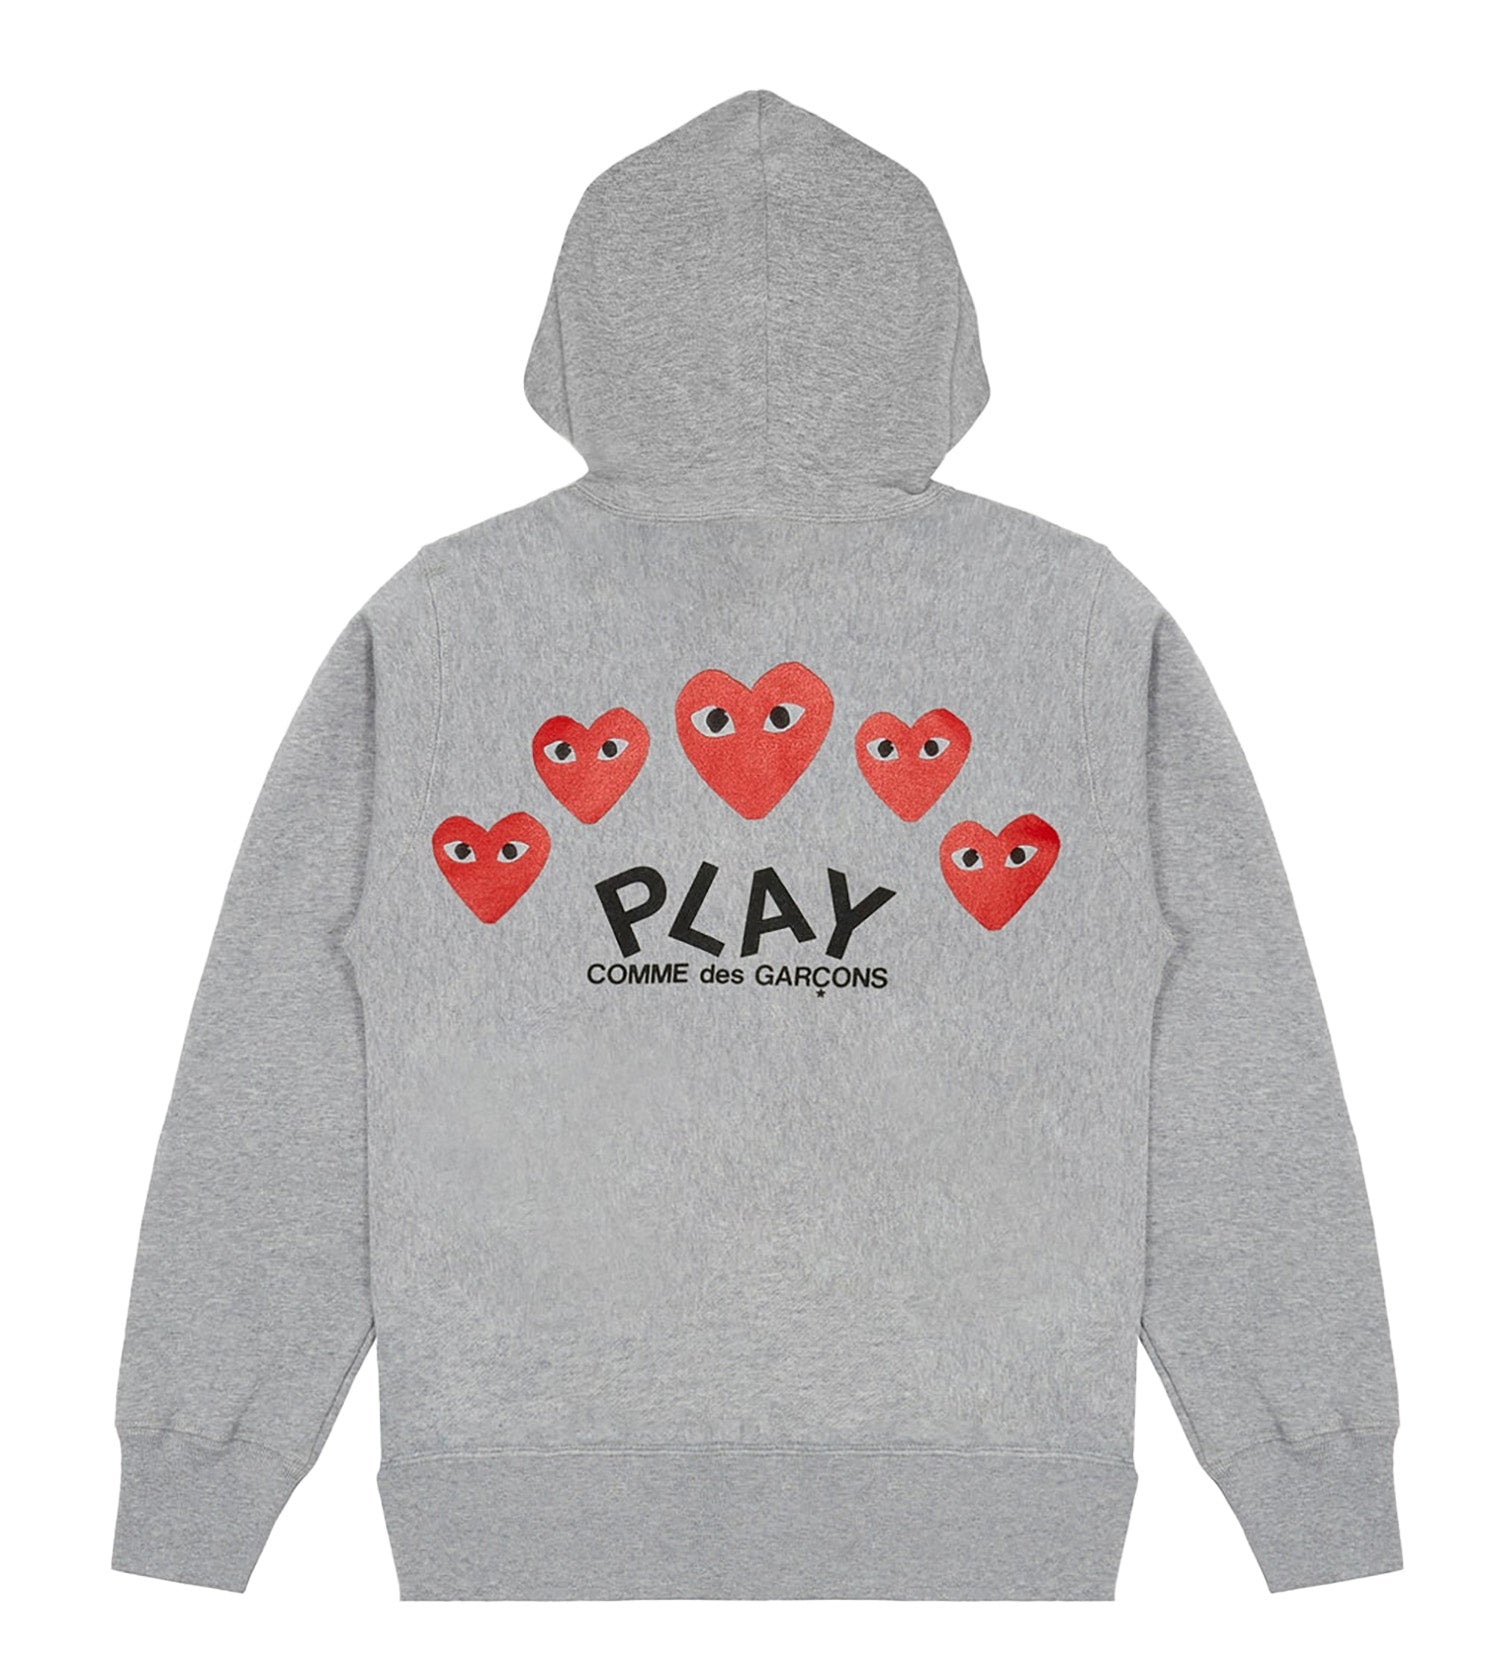 COMME DES GARÇONS PLAY Women's Hooded Sweatshirt with 5 Hearts